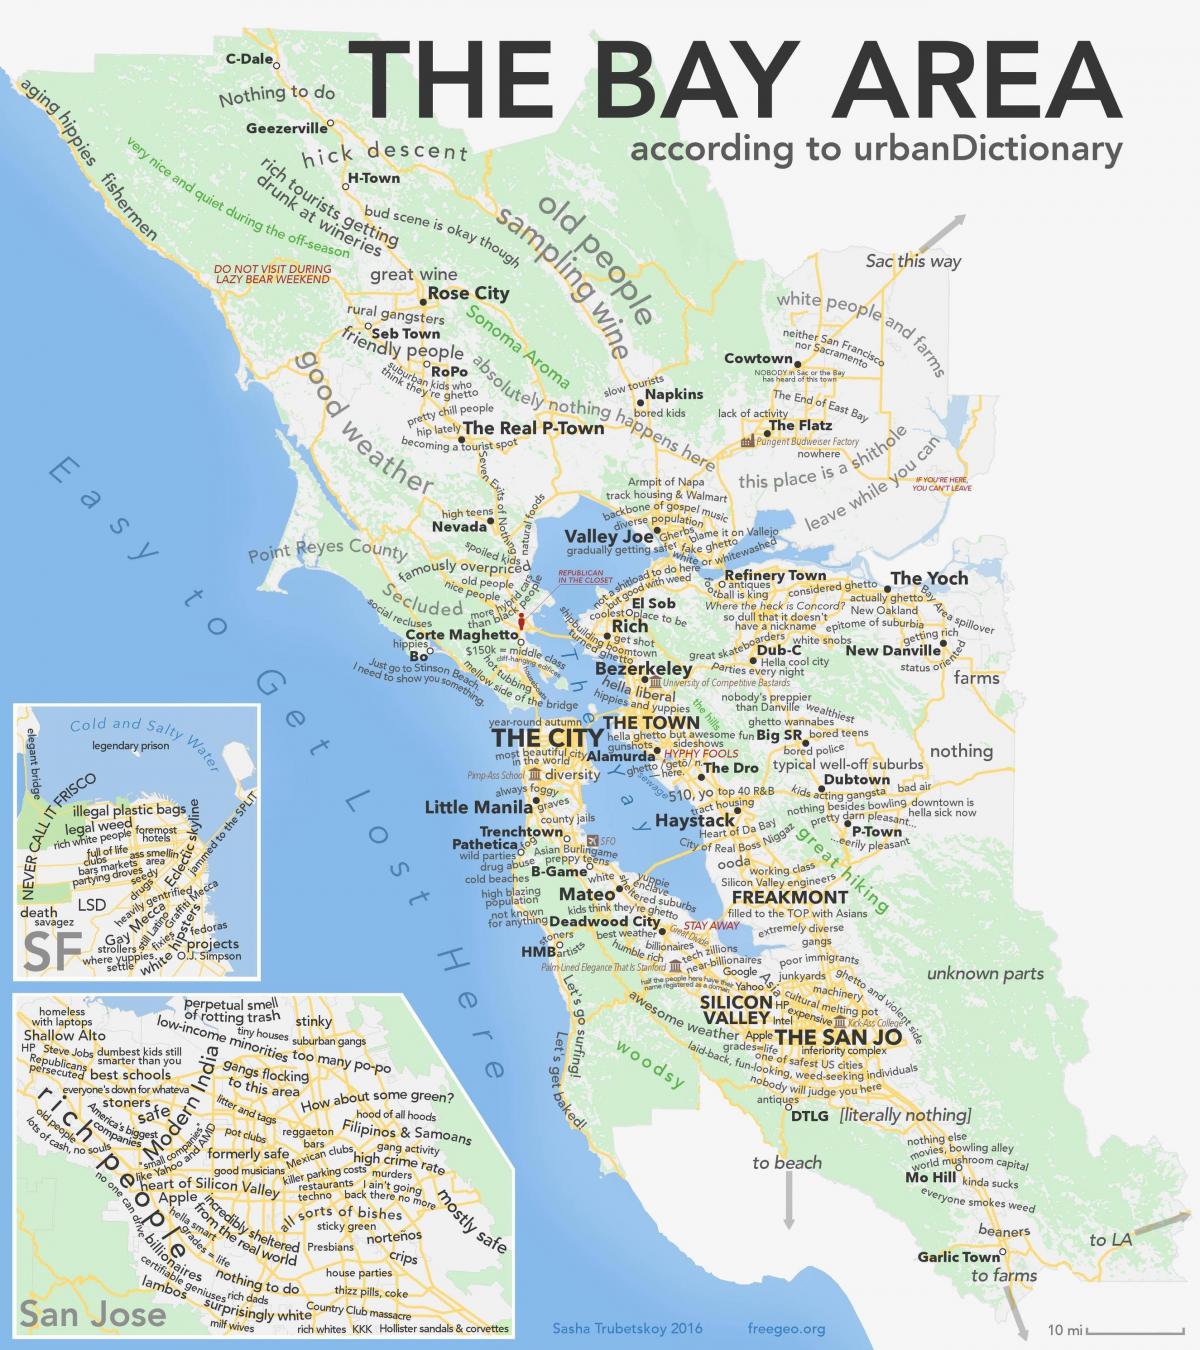 San Francisco bay area kaart kalifornië